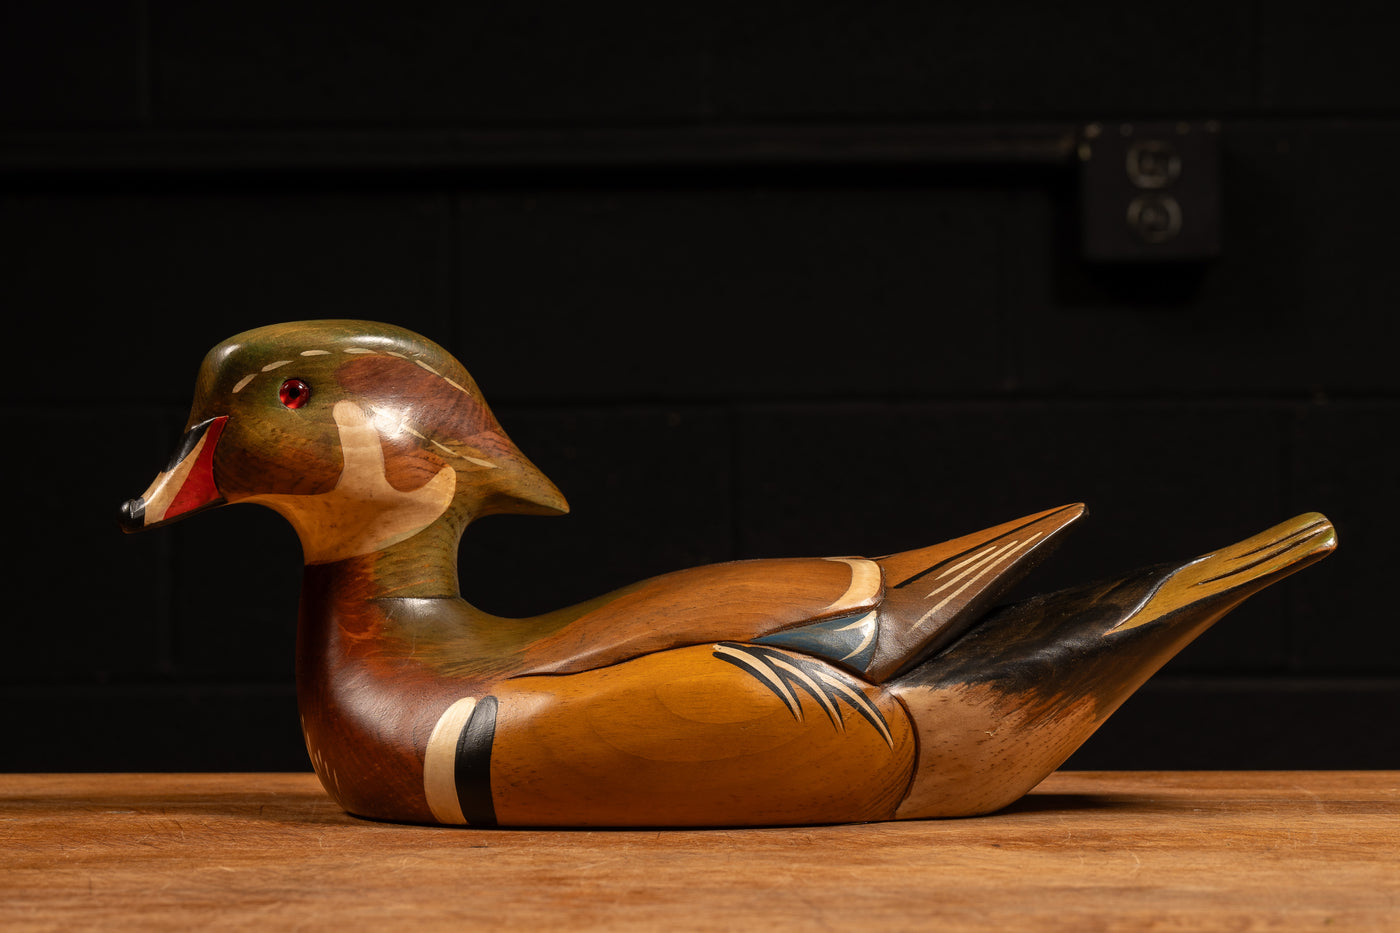 Vintage Grant Goltz Limited Edition Wood Duck Decoy